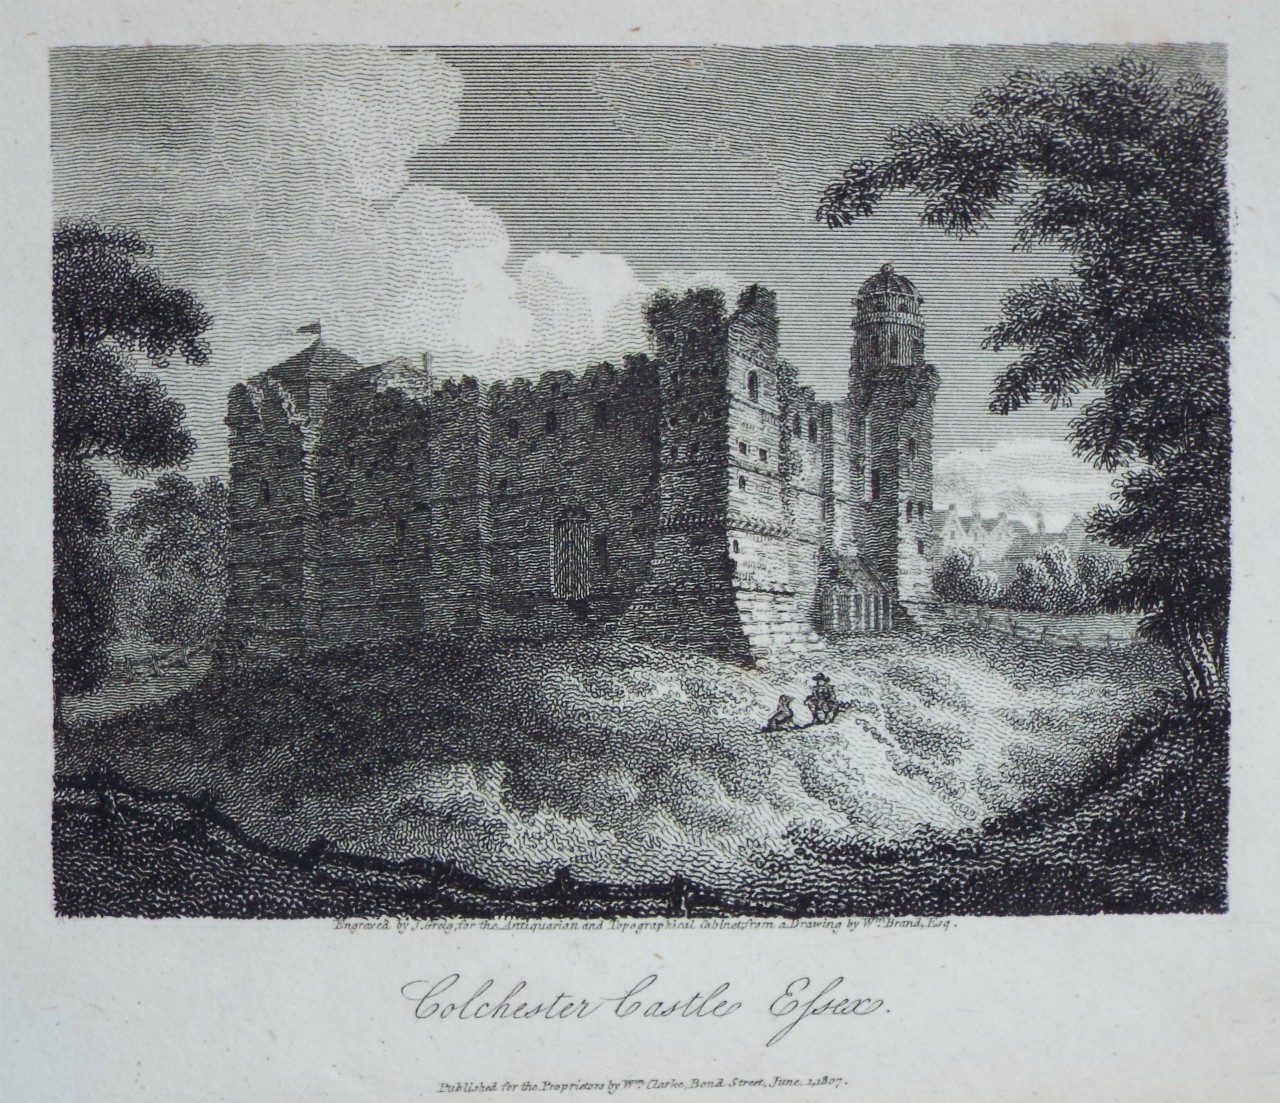 Print - Colchester Castle, Essex. - Greig